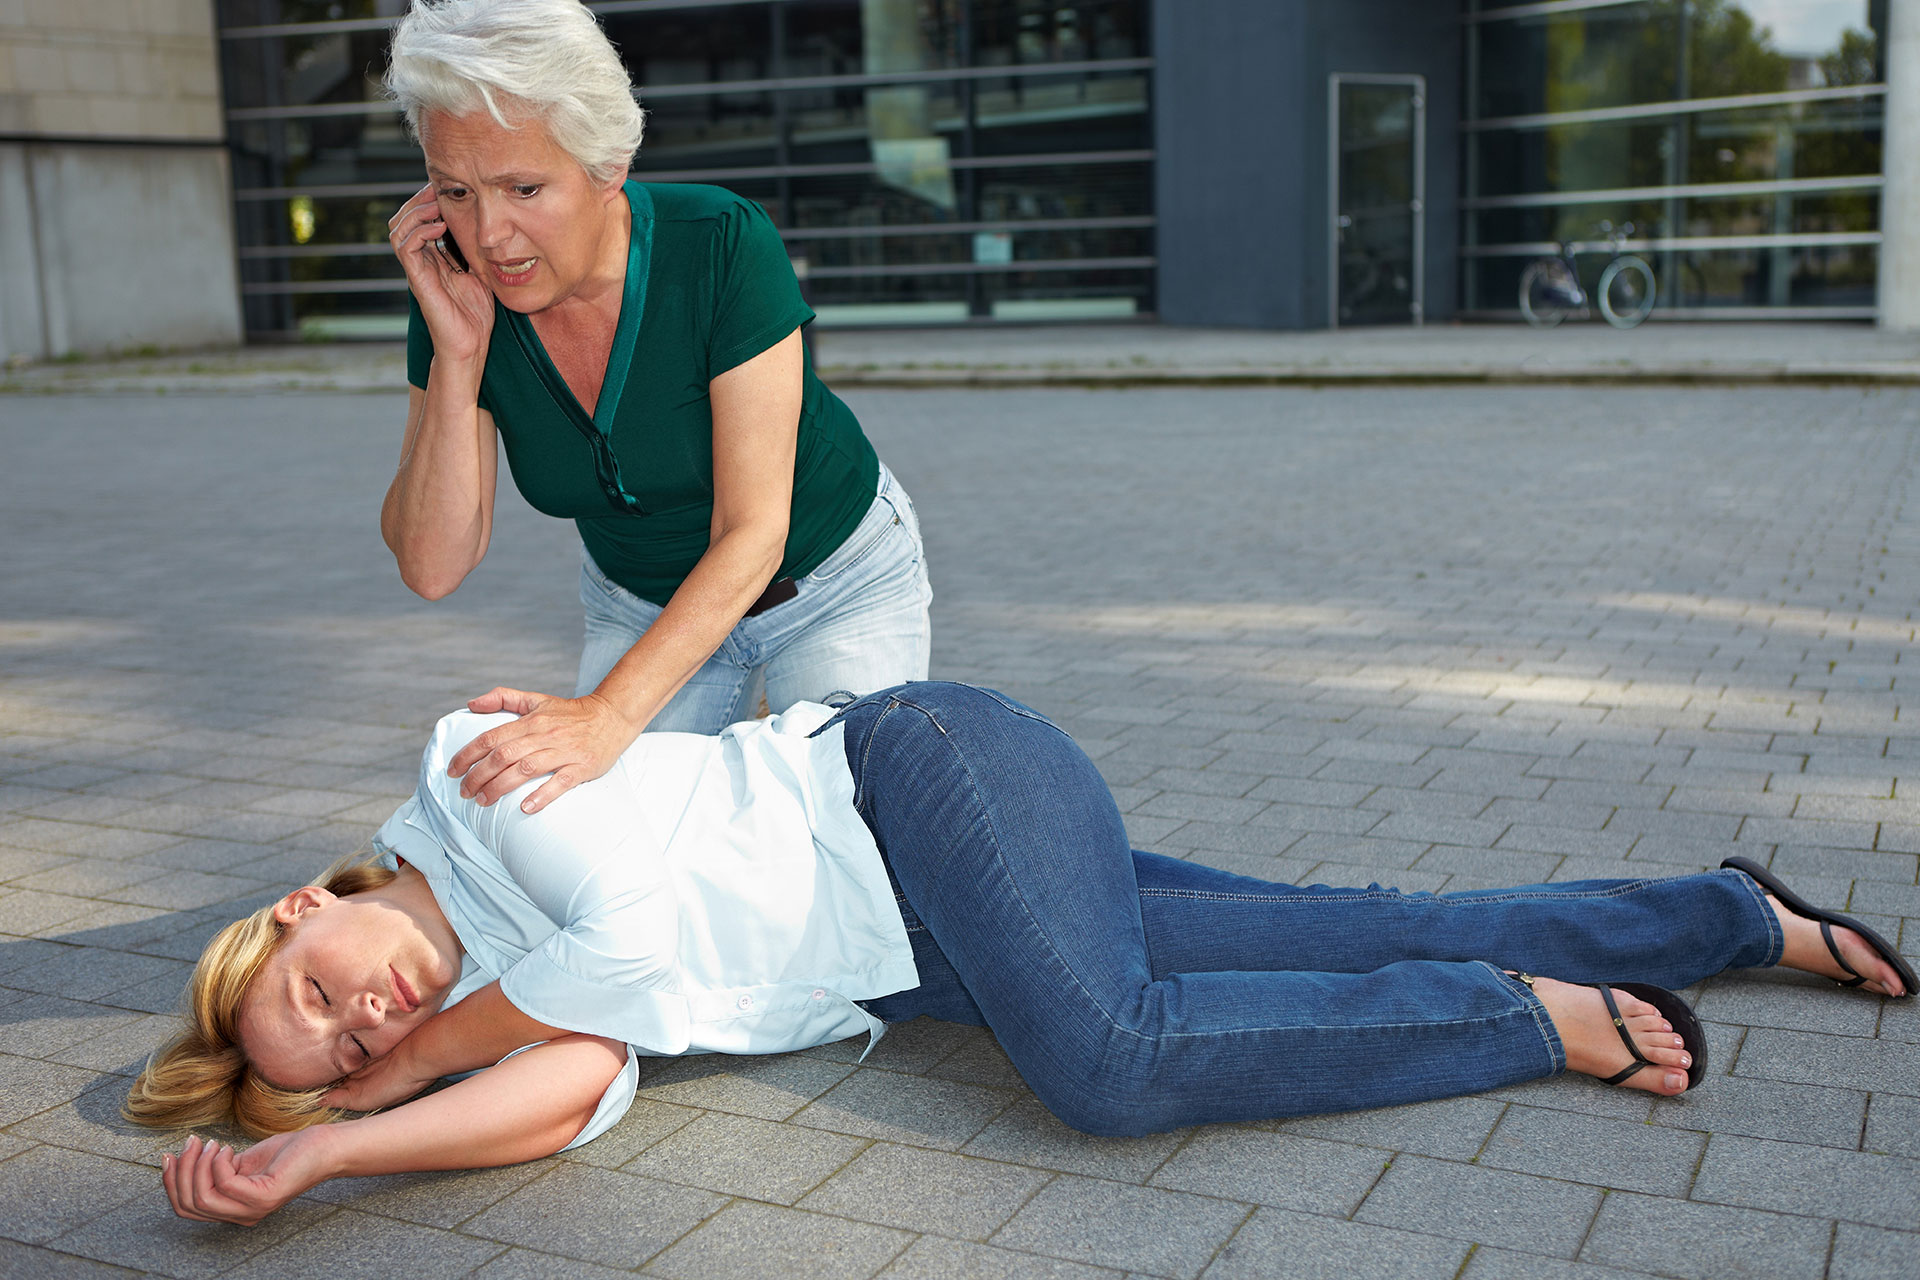 Woman having a seizure along a woman asking for help